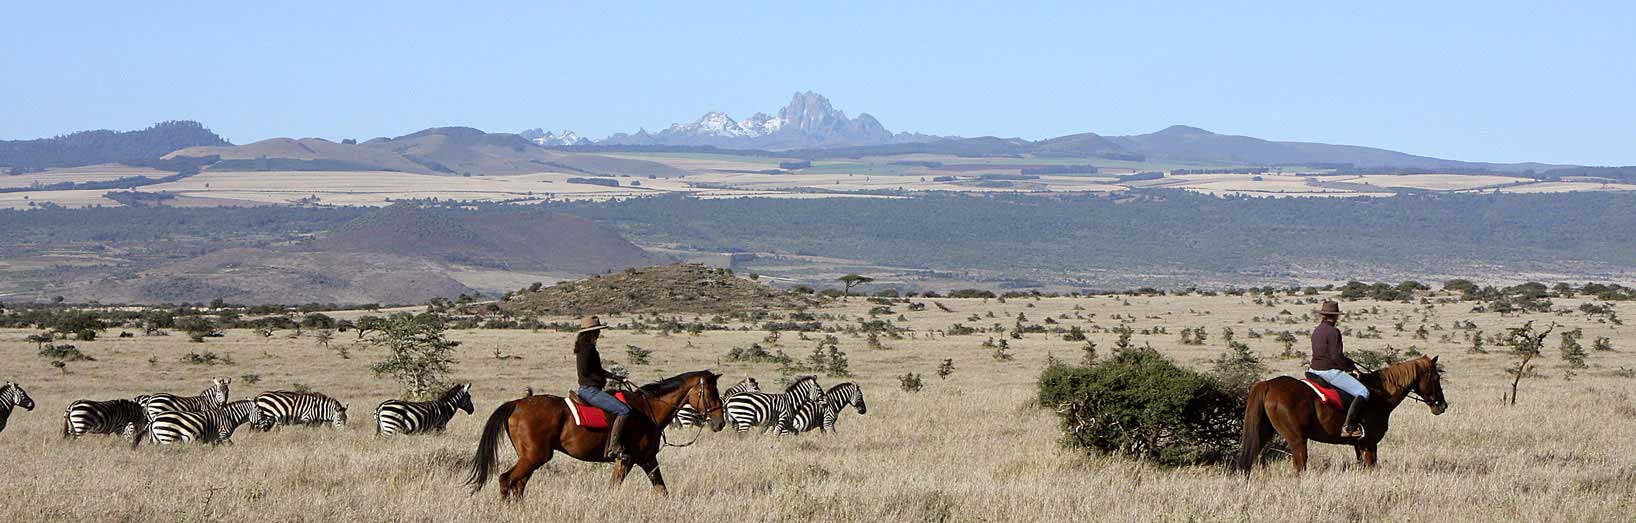 Horse riding safaris Kenya.jpg